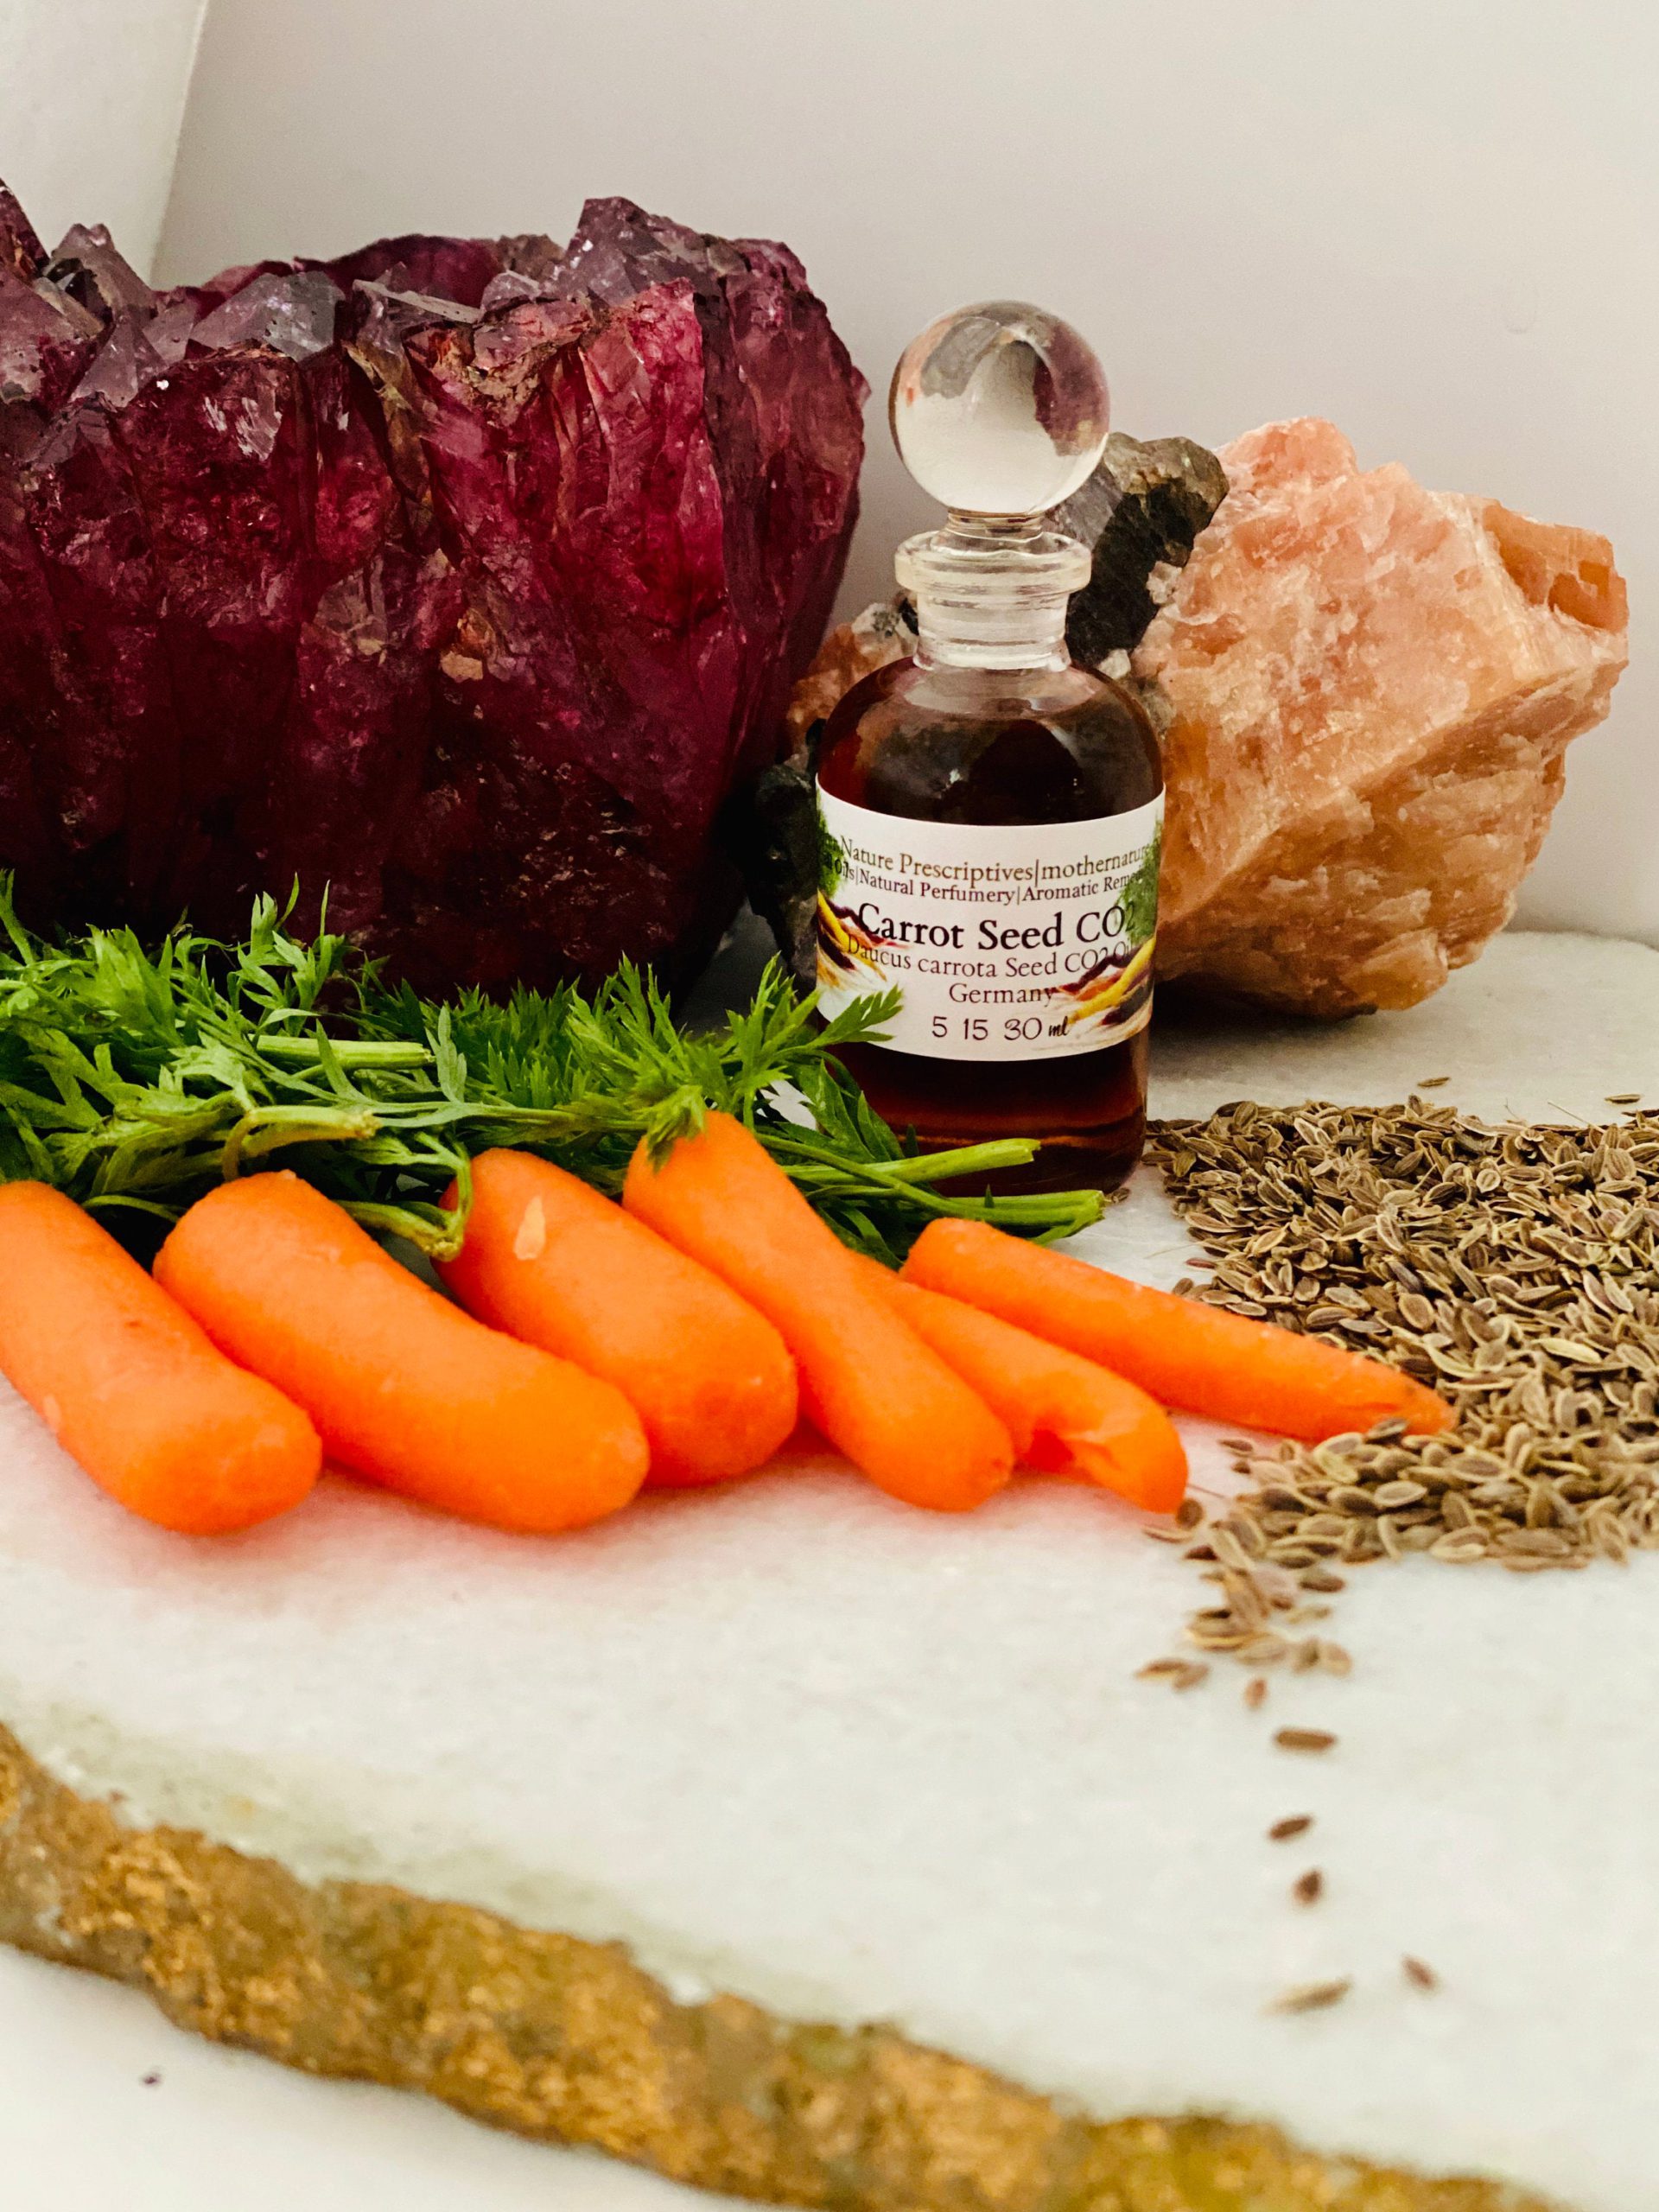 Carrot Seed Essential Oil – Sensible Remedies